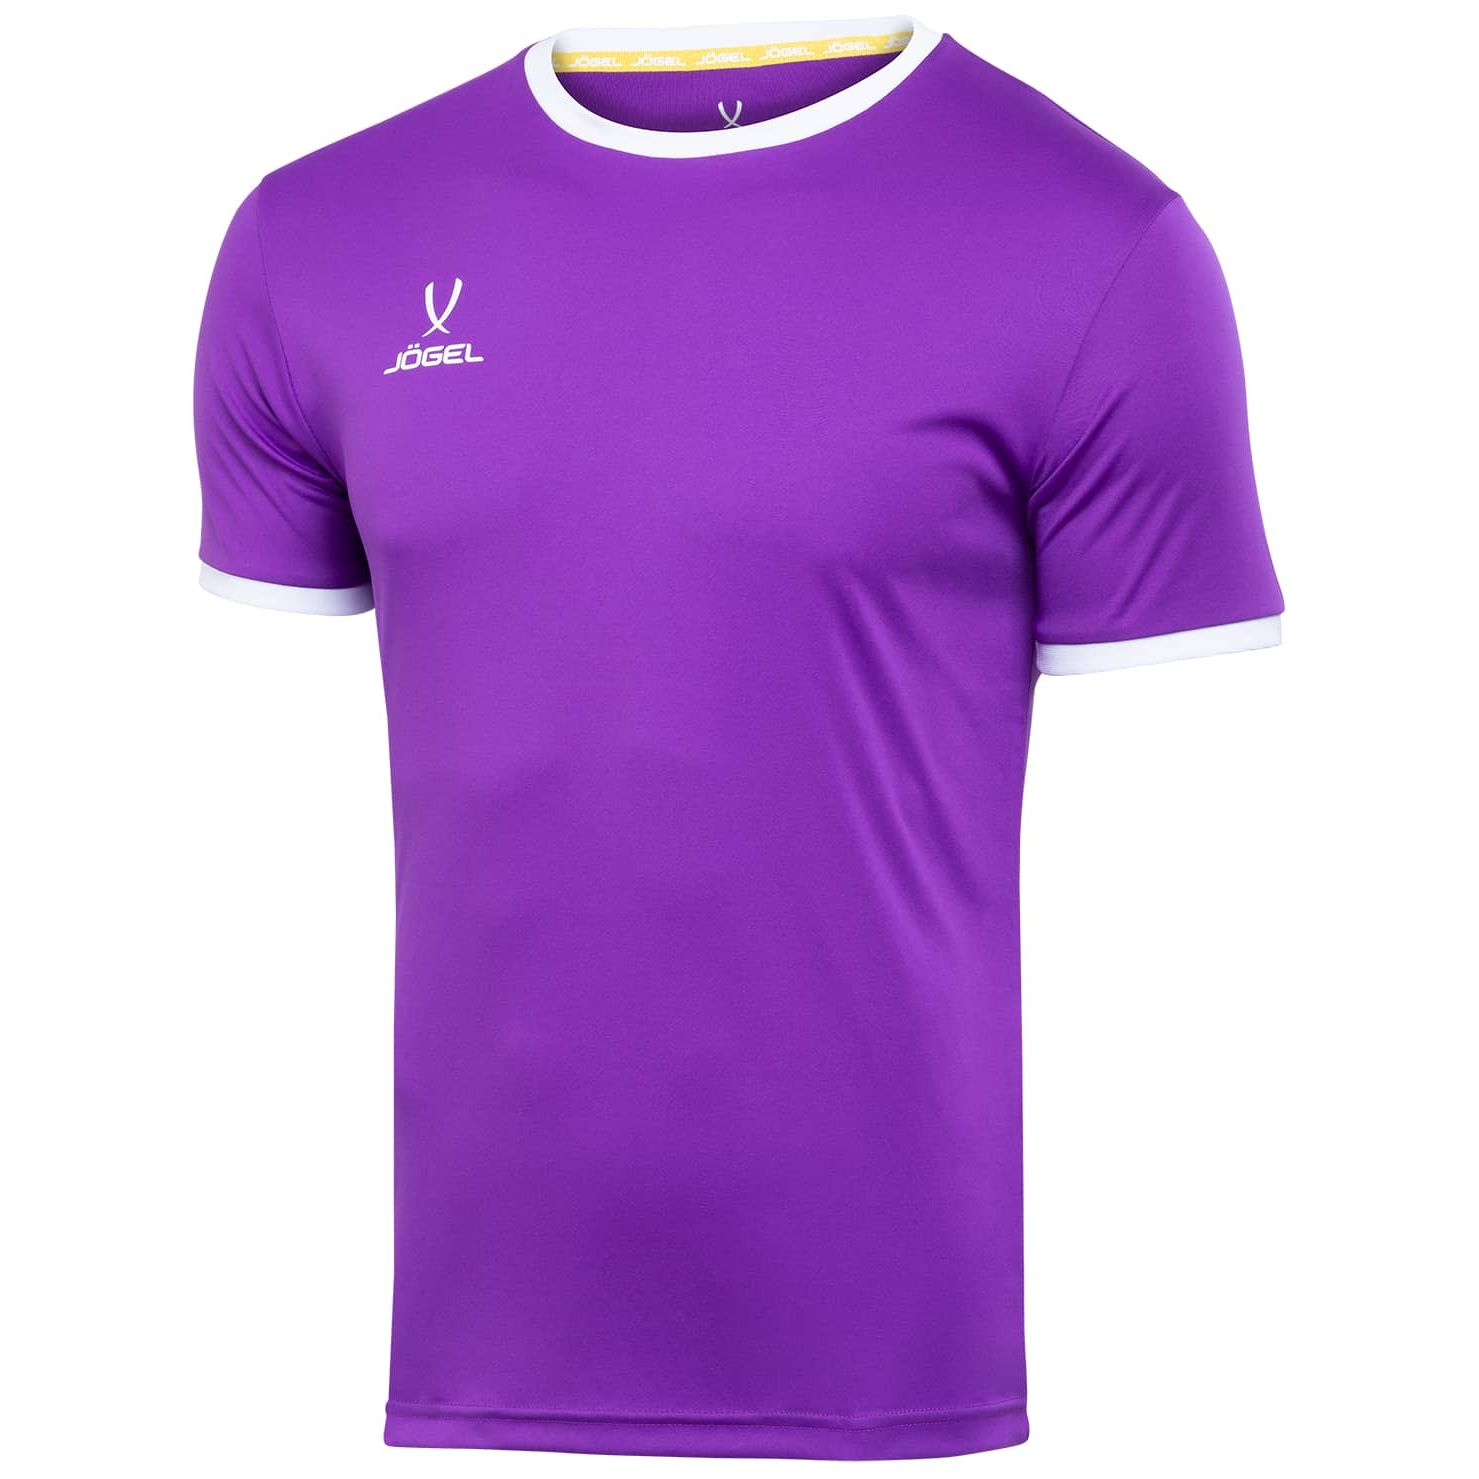 Футболка футбольная Jogel Camp Origin, purple/white, XXL